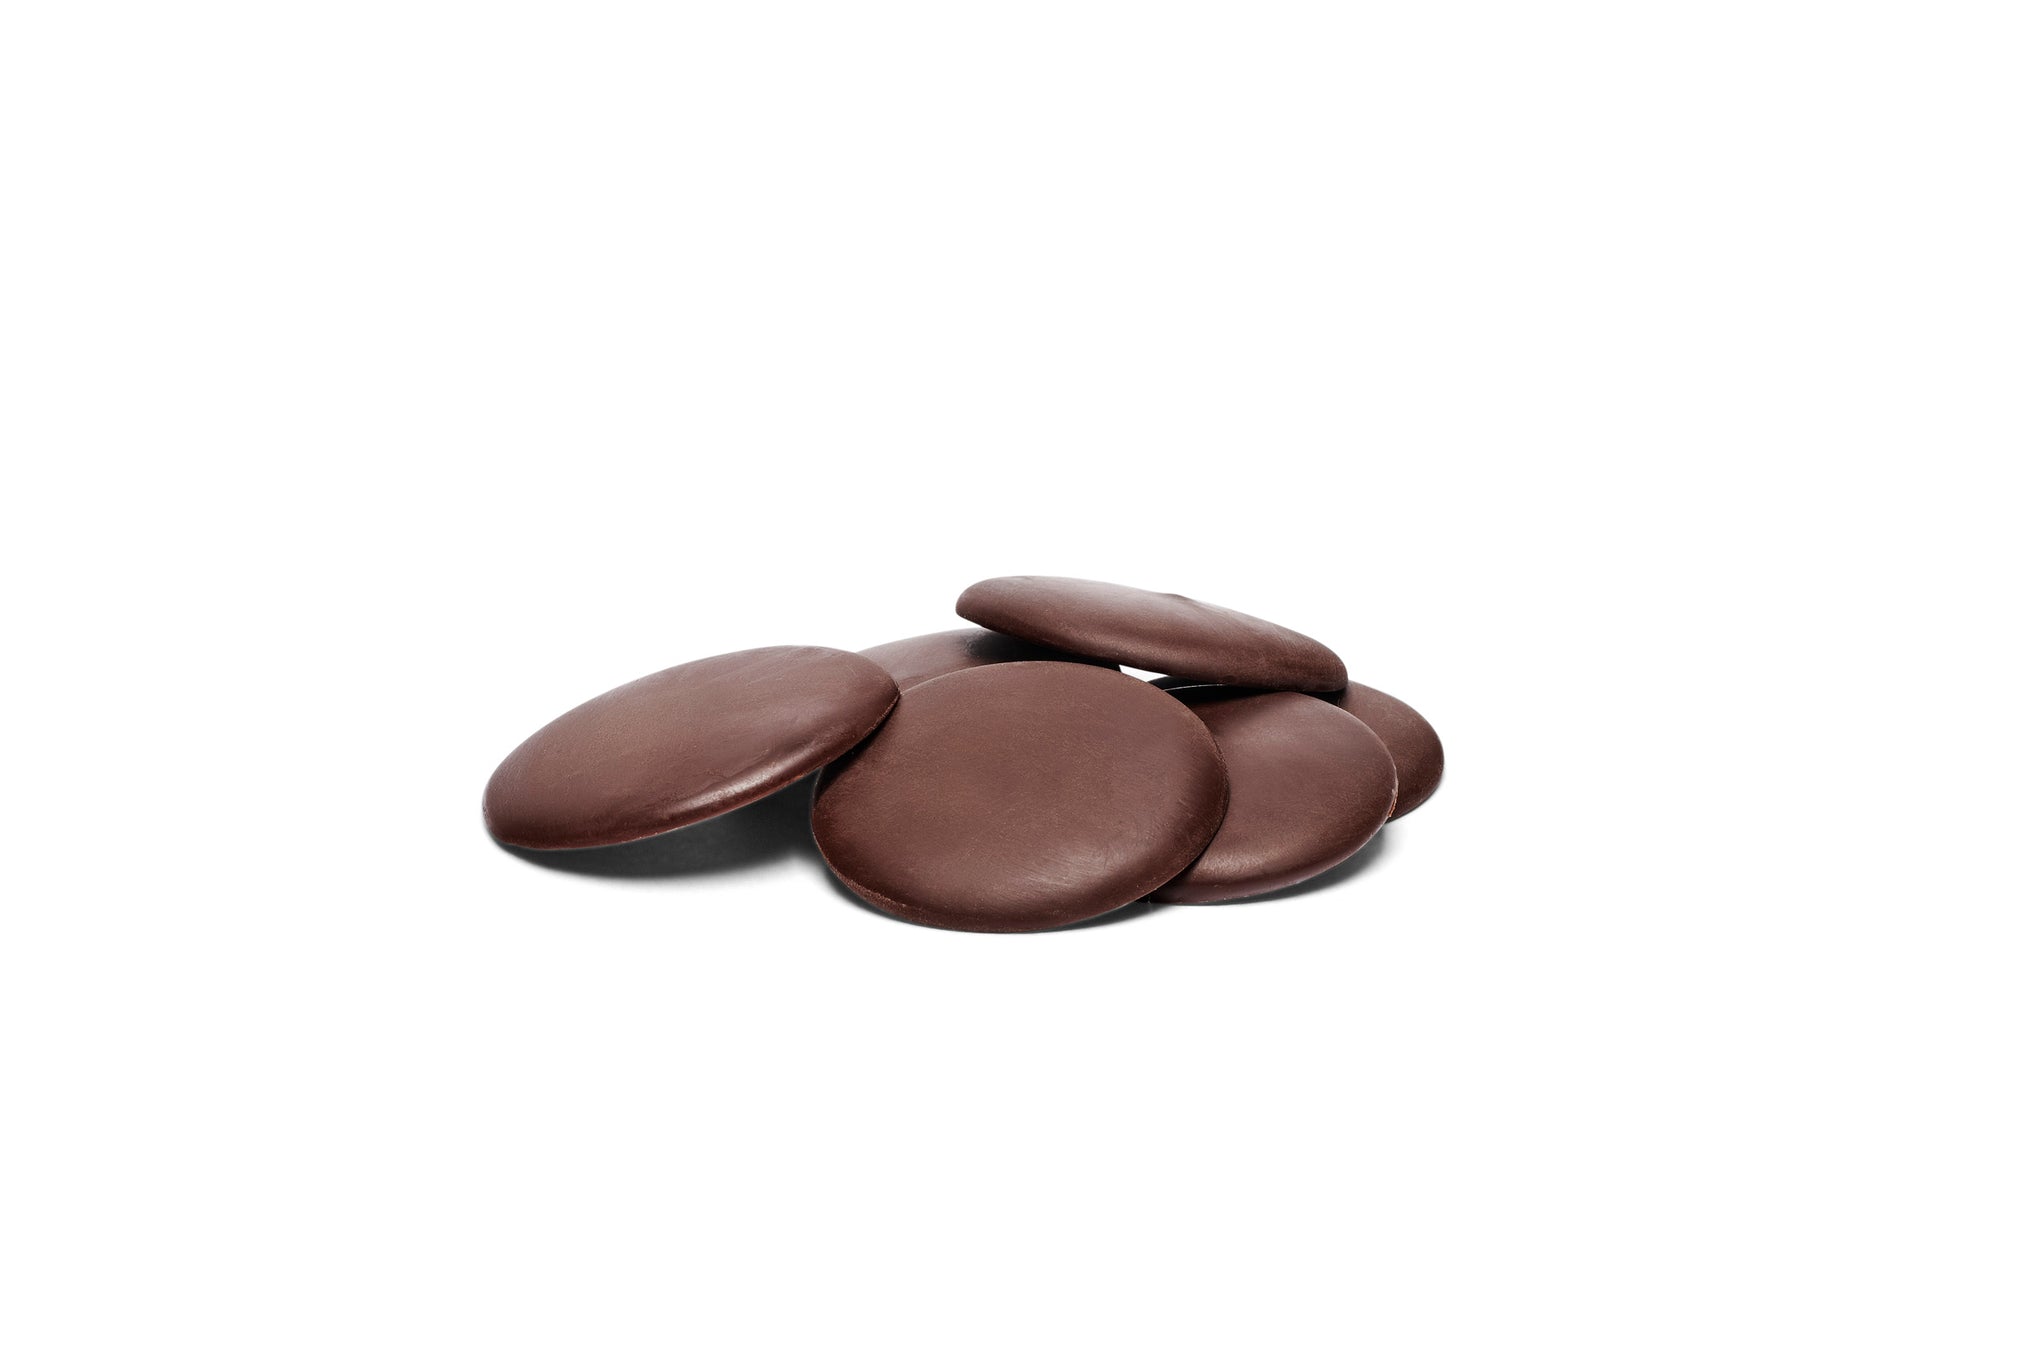 Caramelised Coconut Dotties | Dark Chocolate